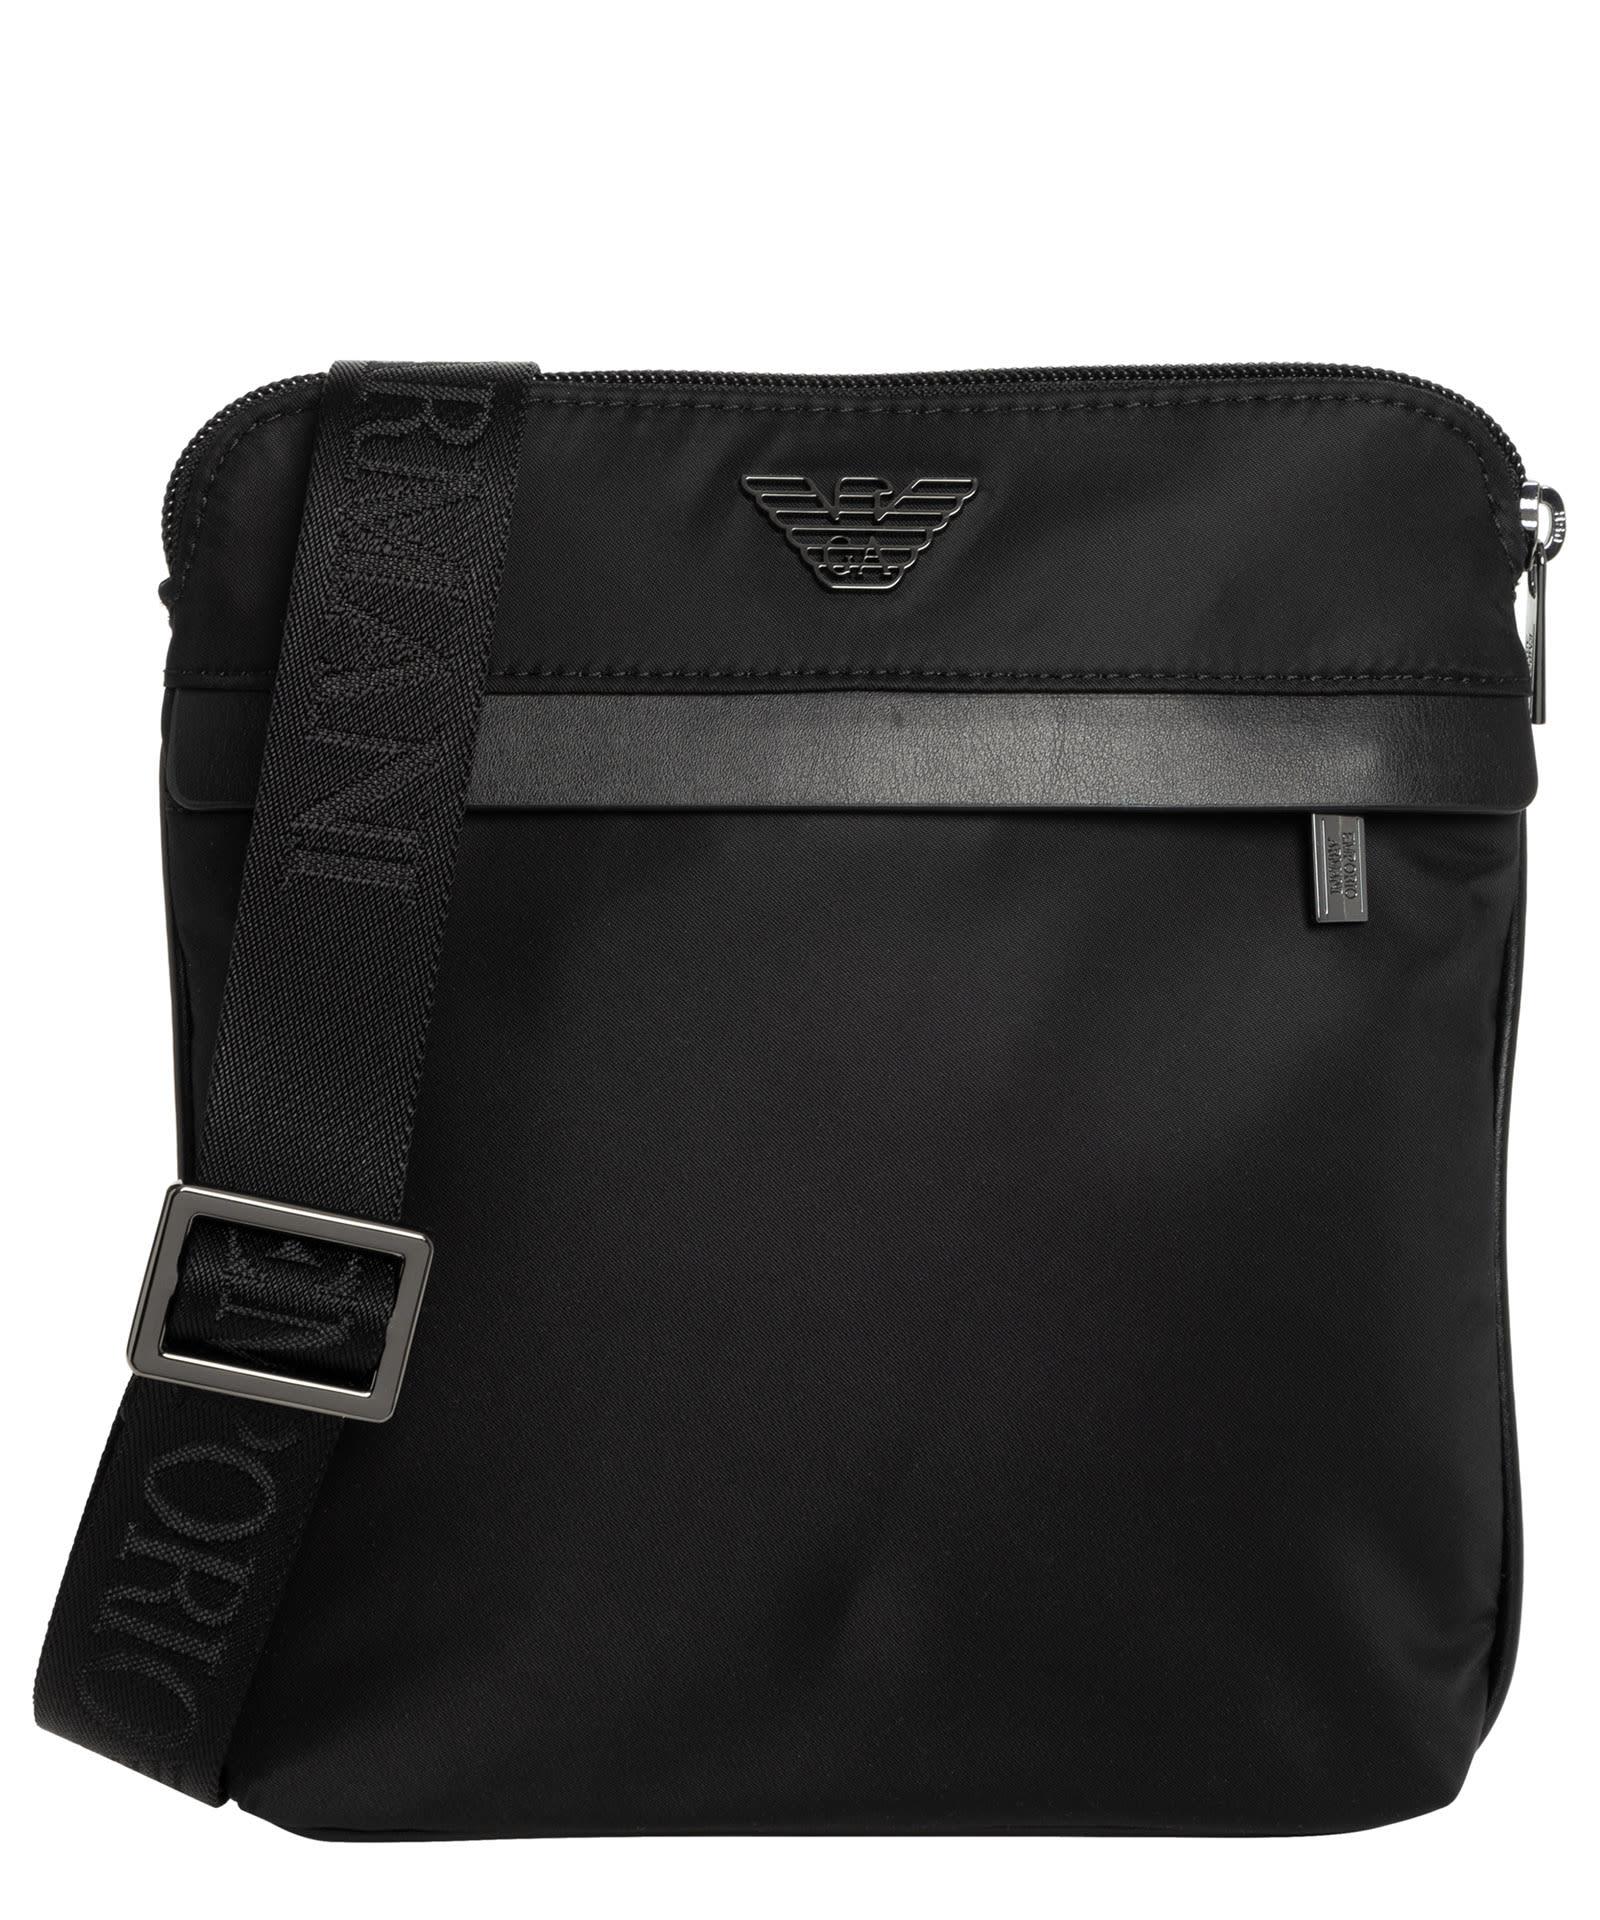 Giorgio Armani Handheld Wallet Black For Men | Watches Prime